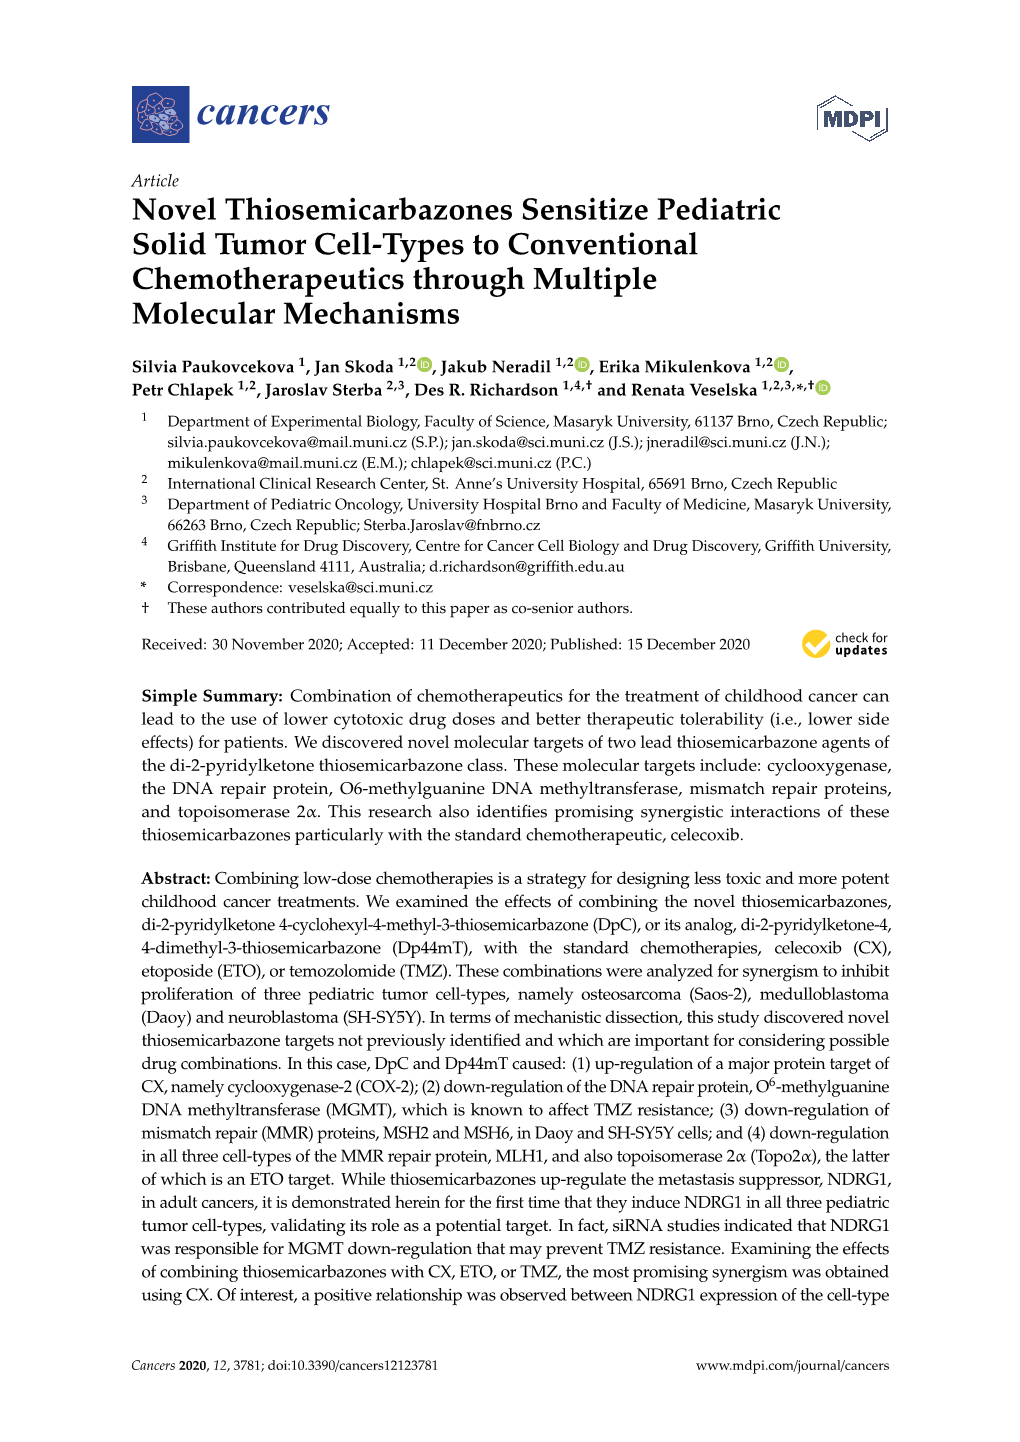 Novel Thiosemicarbazones Sensitize Pediatric Solid Tumor Cell-Types to Conventional Chemotherapeutics Through Multiple Molecular Mechanisms